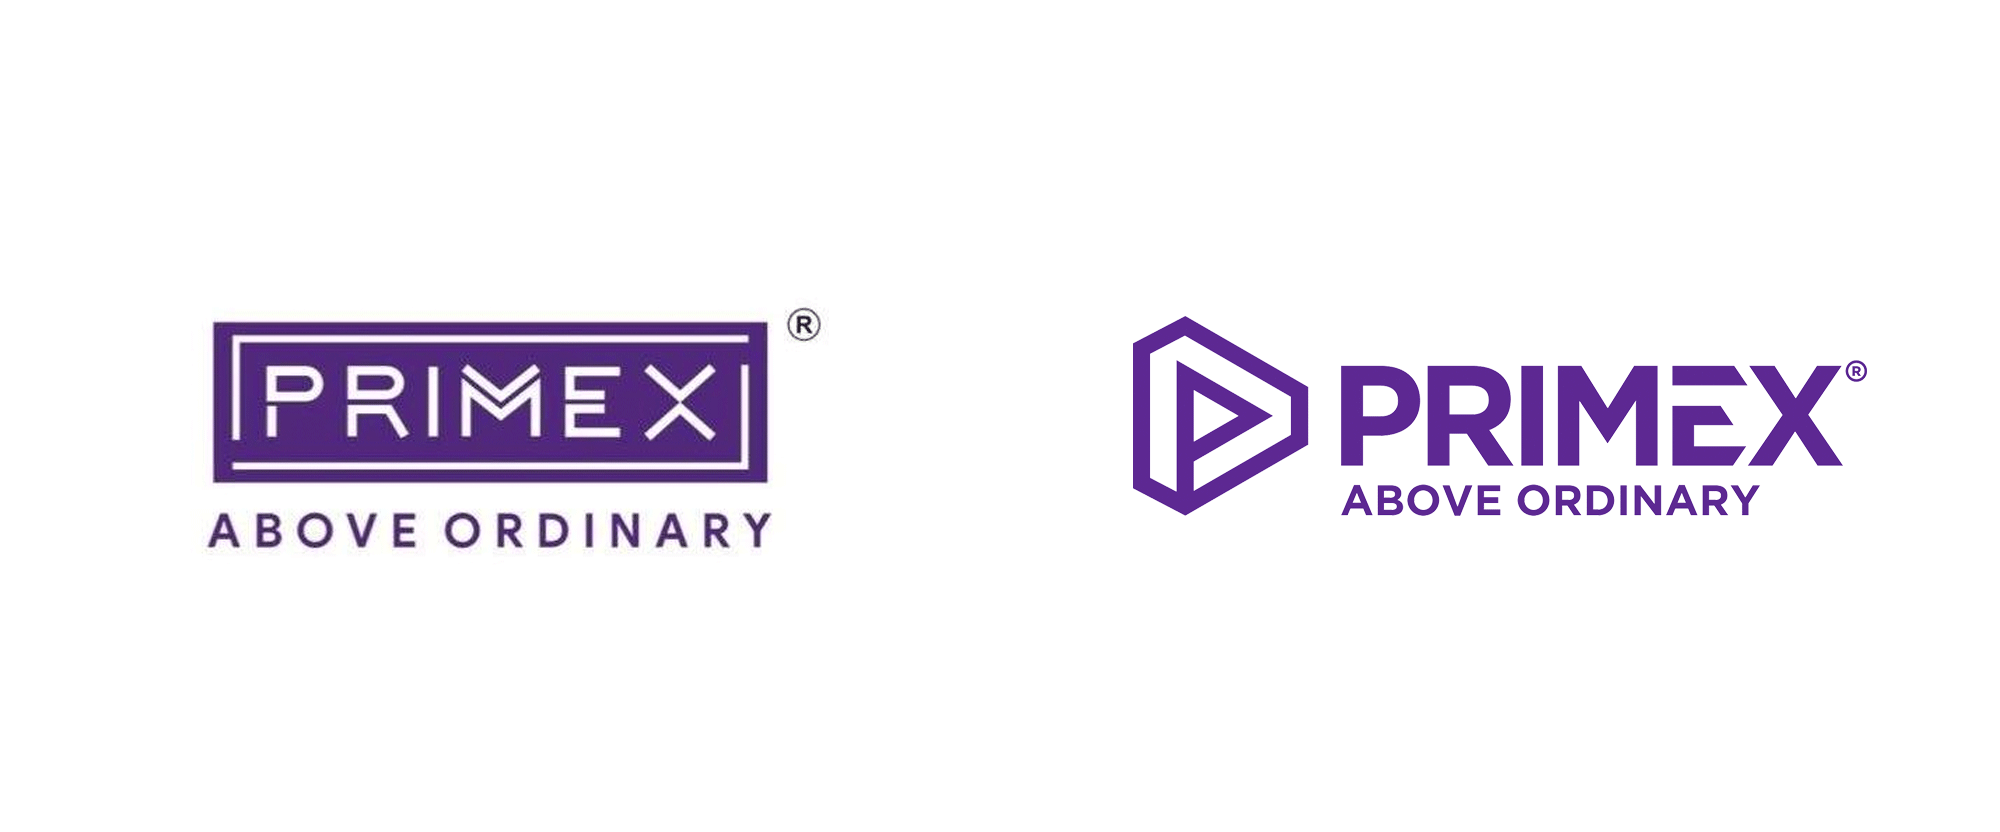 New Logo and Identity for Primex by Identity Brandcom